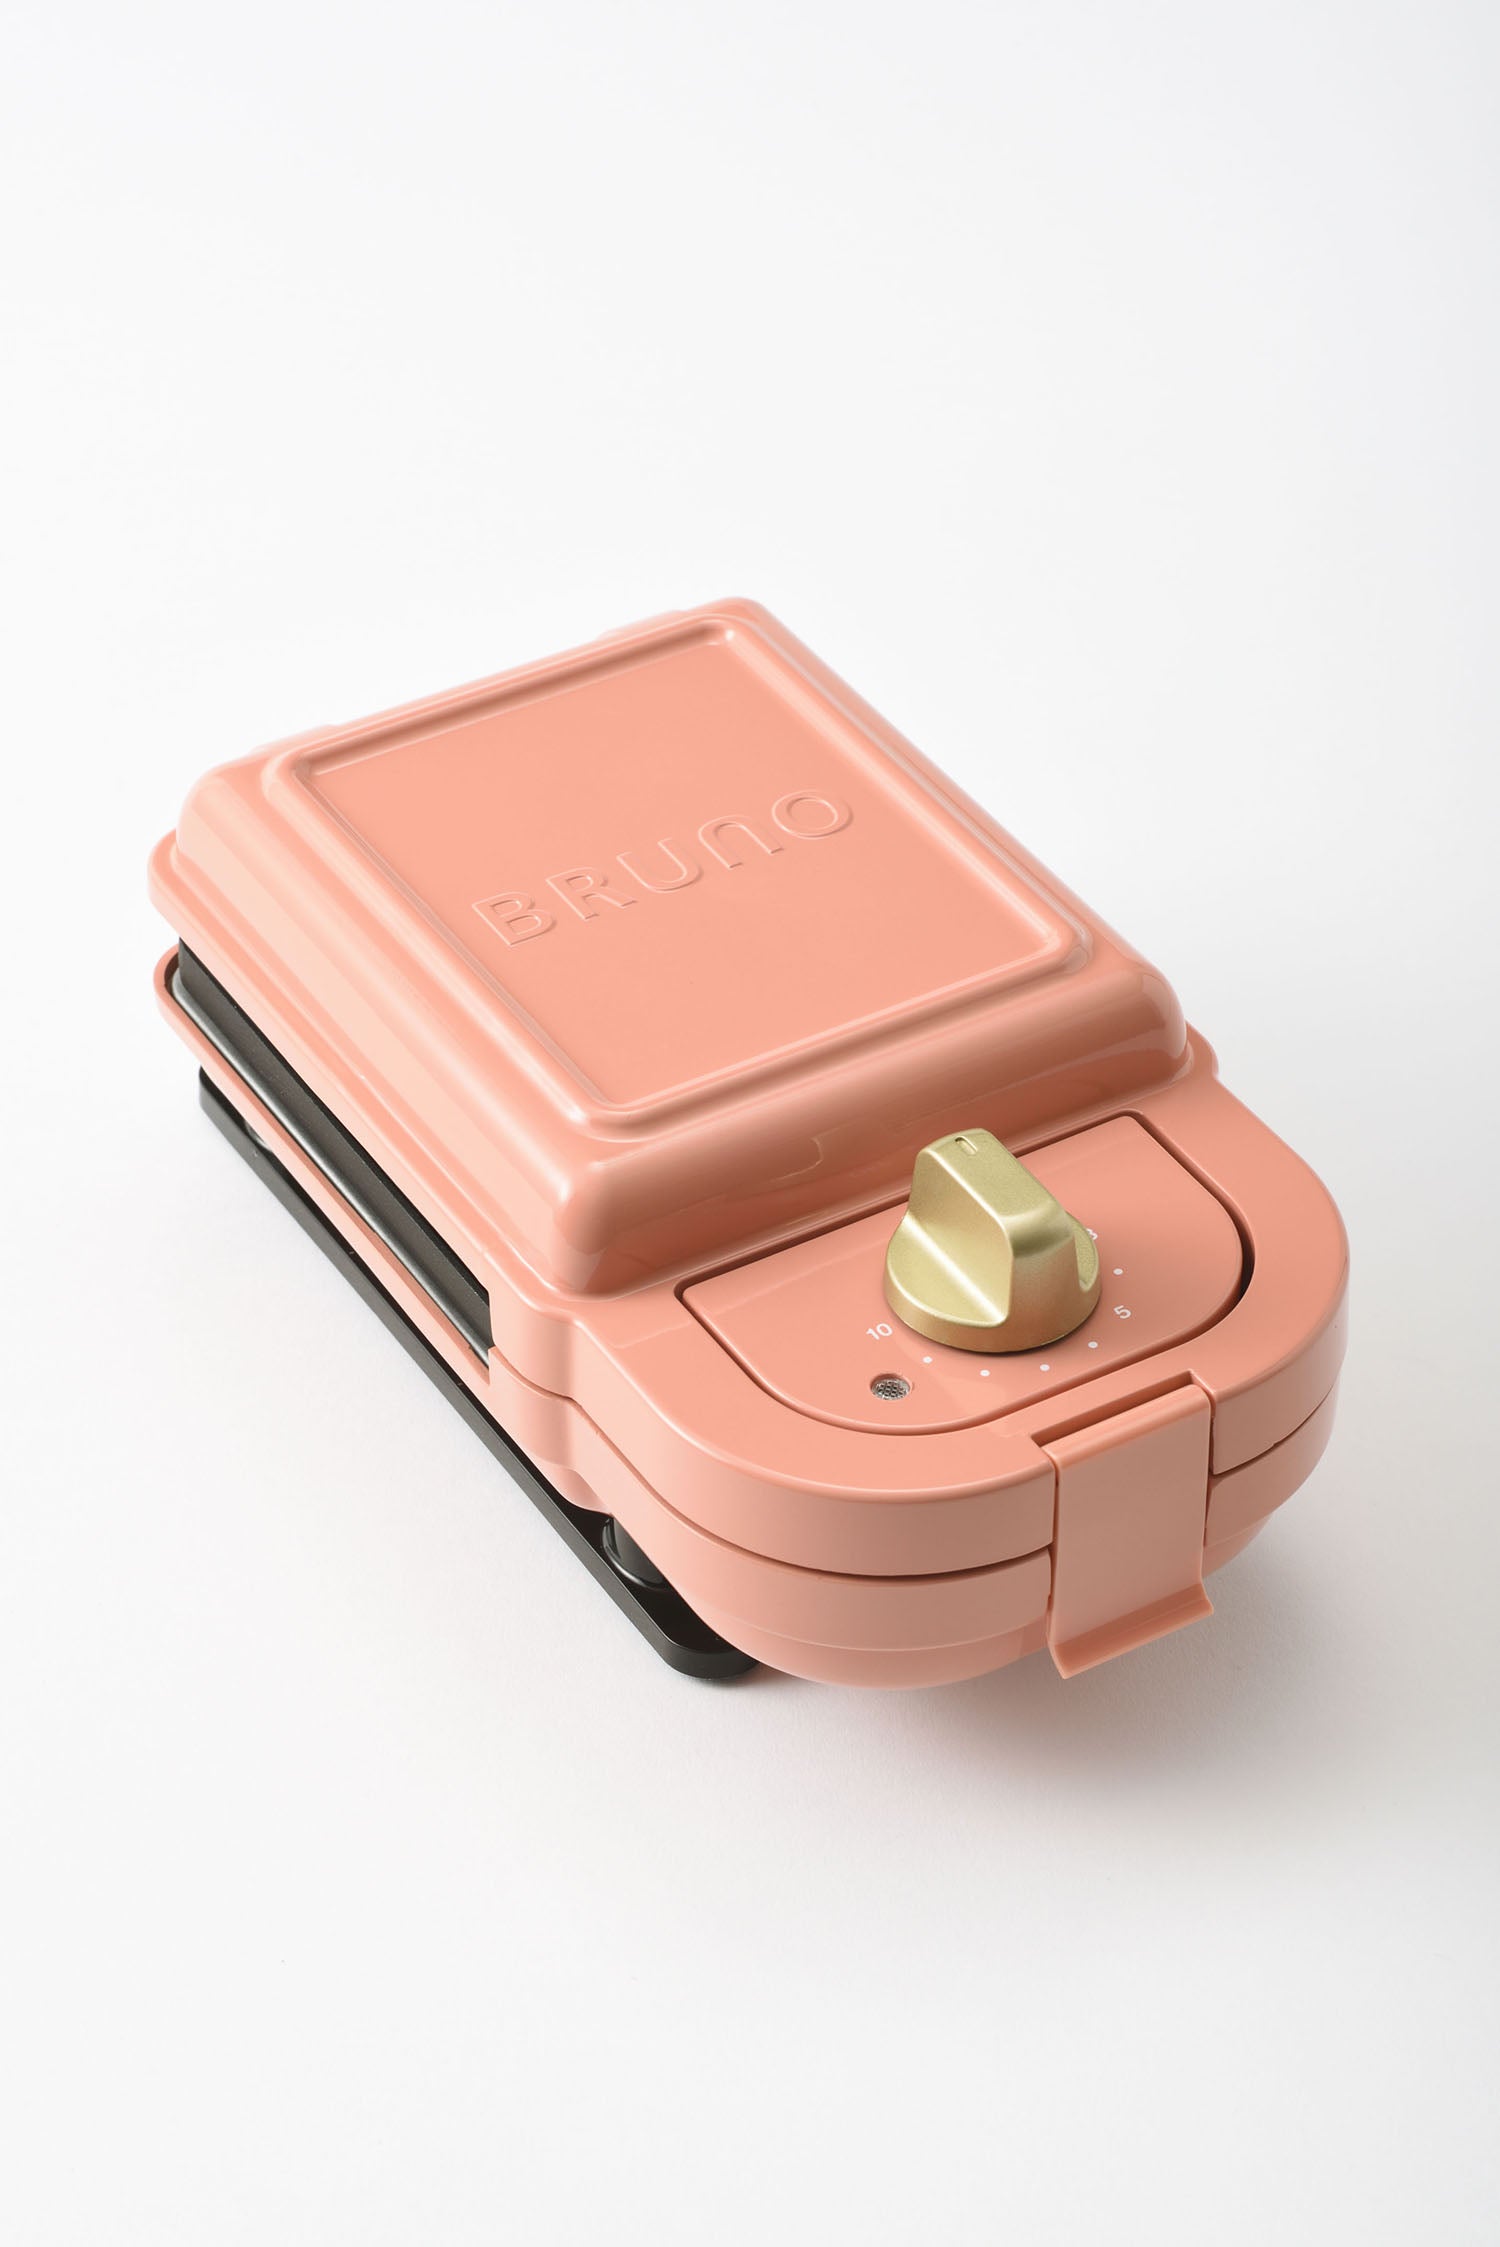 BRUNO Single Hot Sandwich Maker - Coral Pink